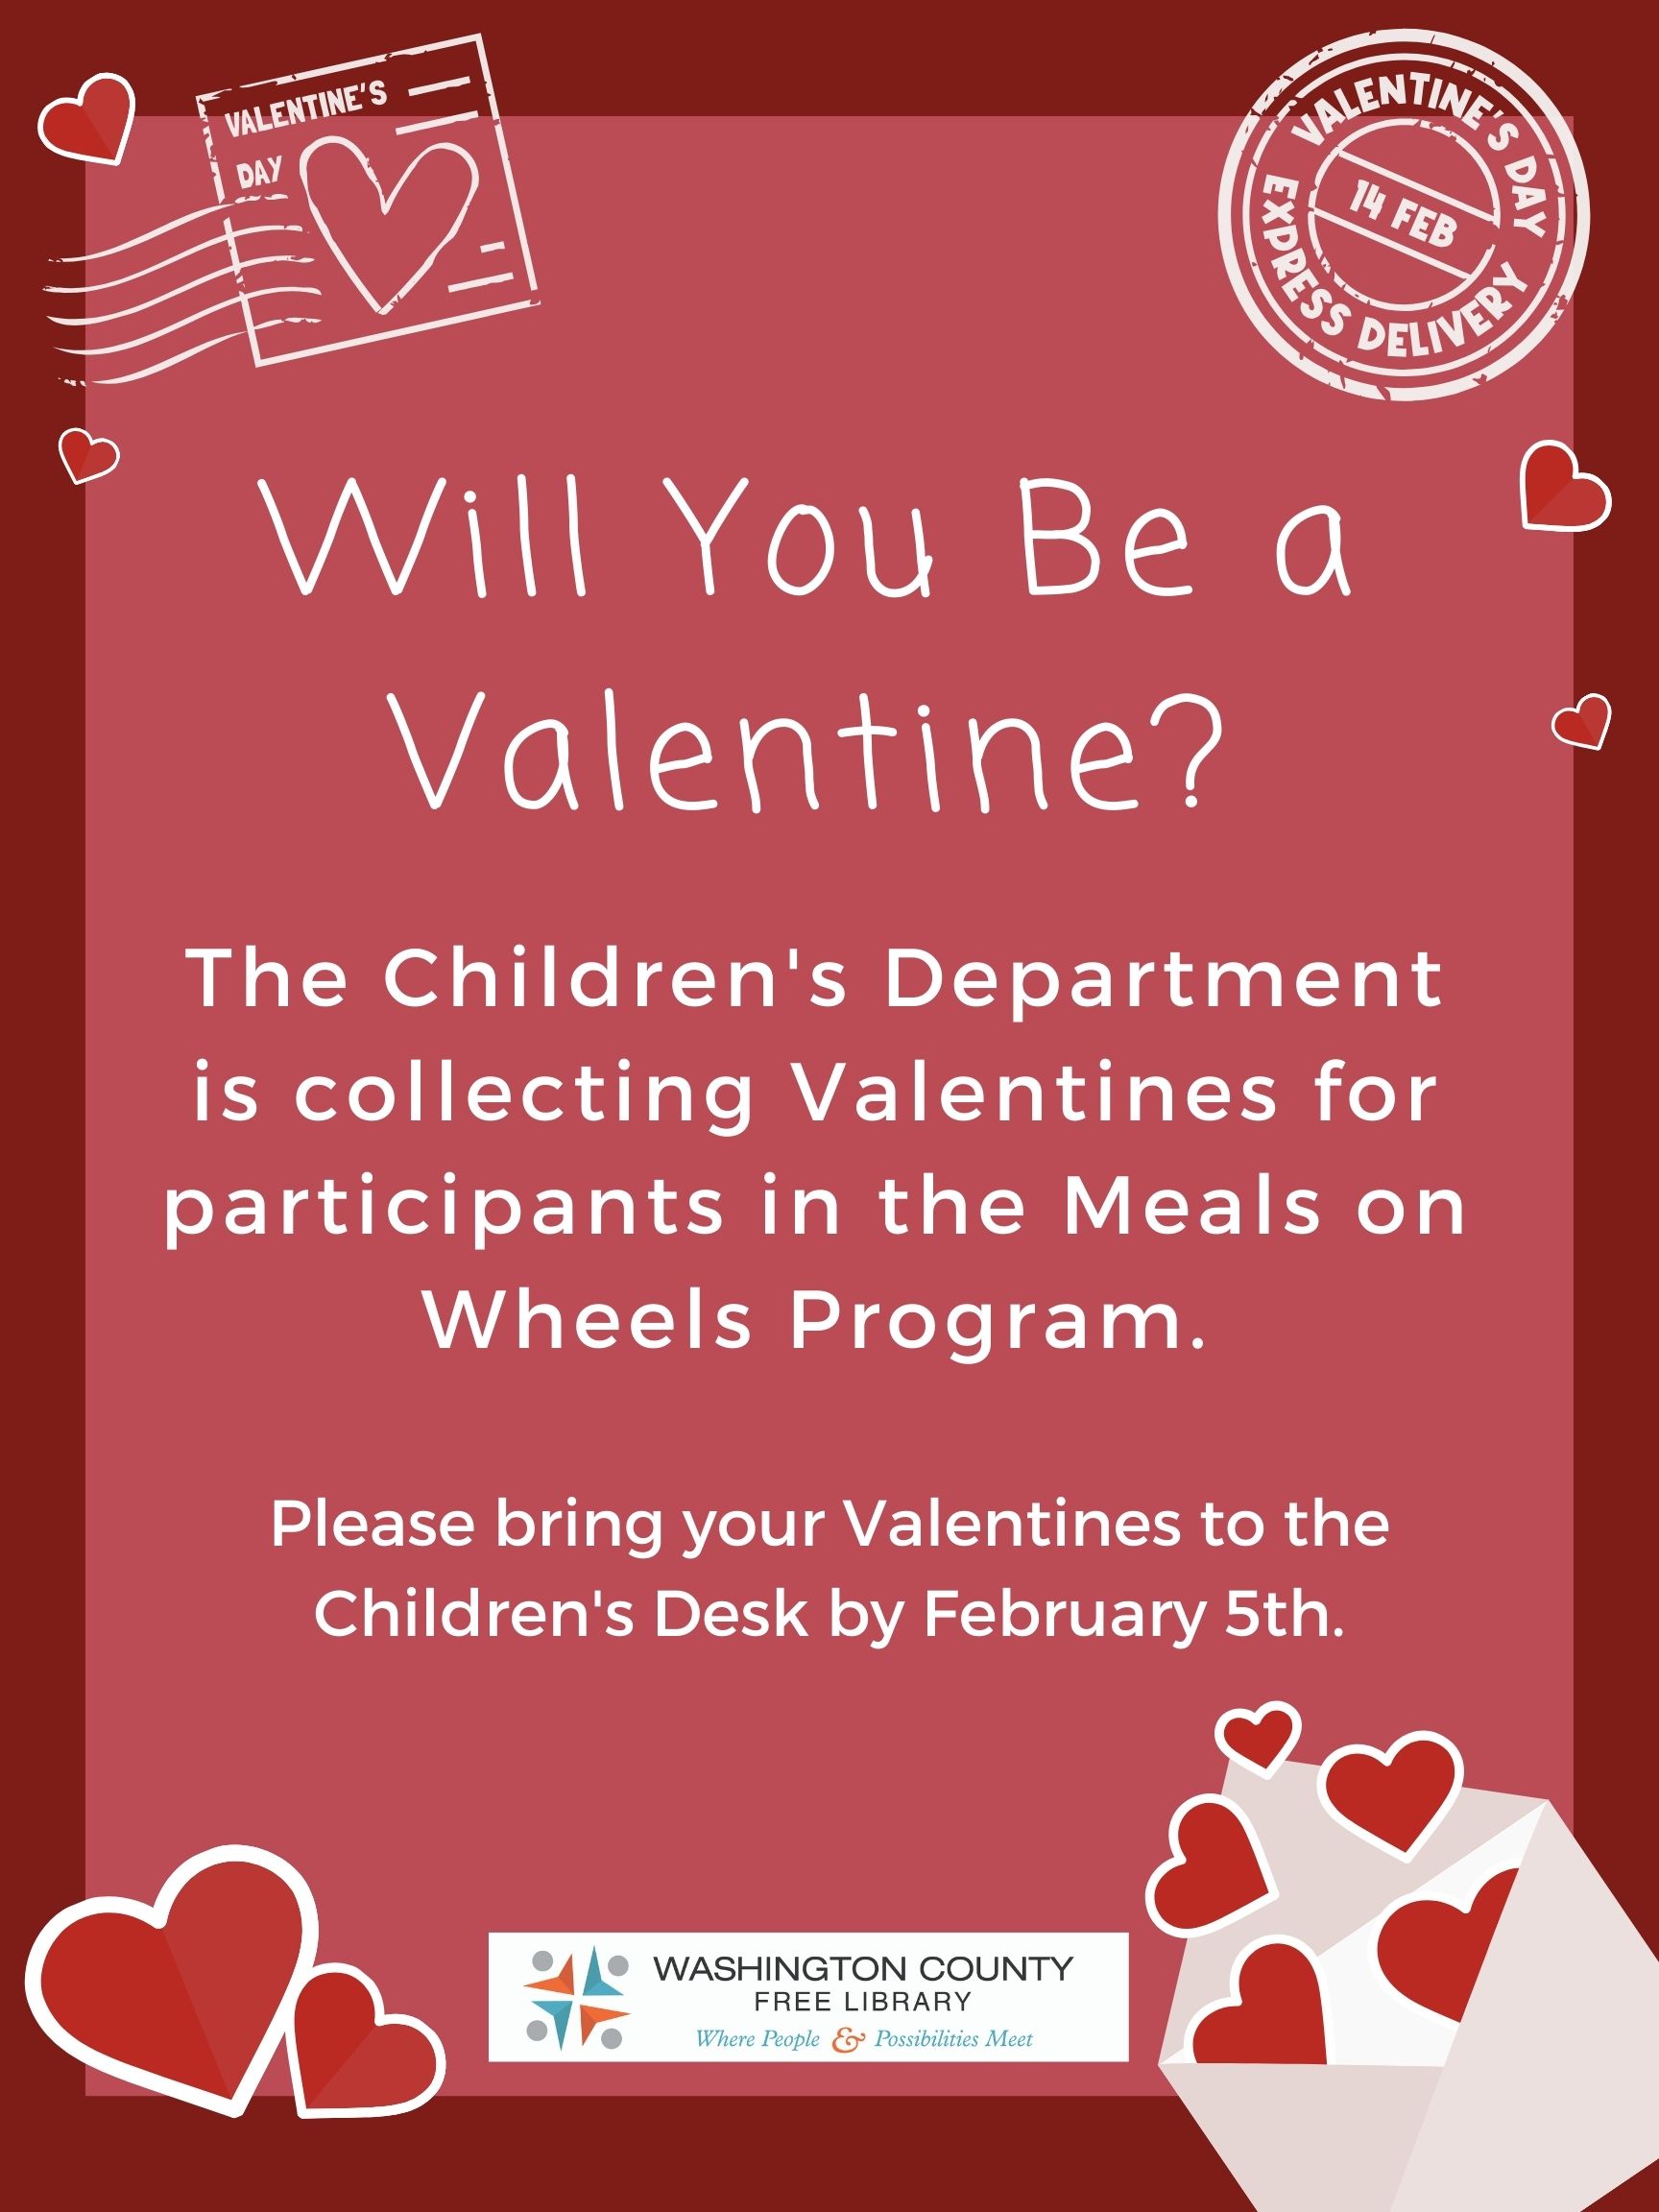 Meals on Wheels Valentines Information